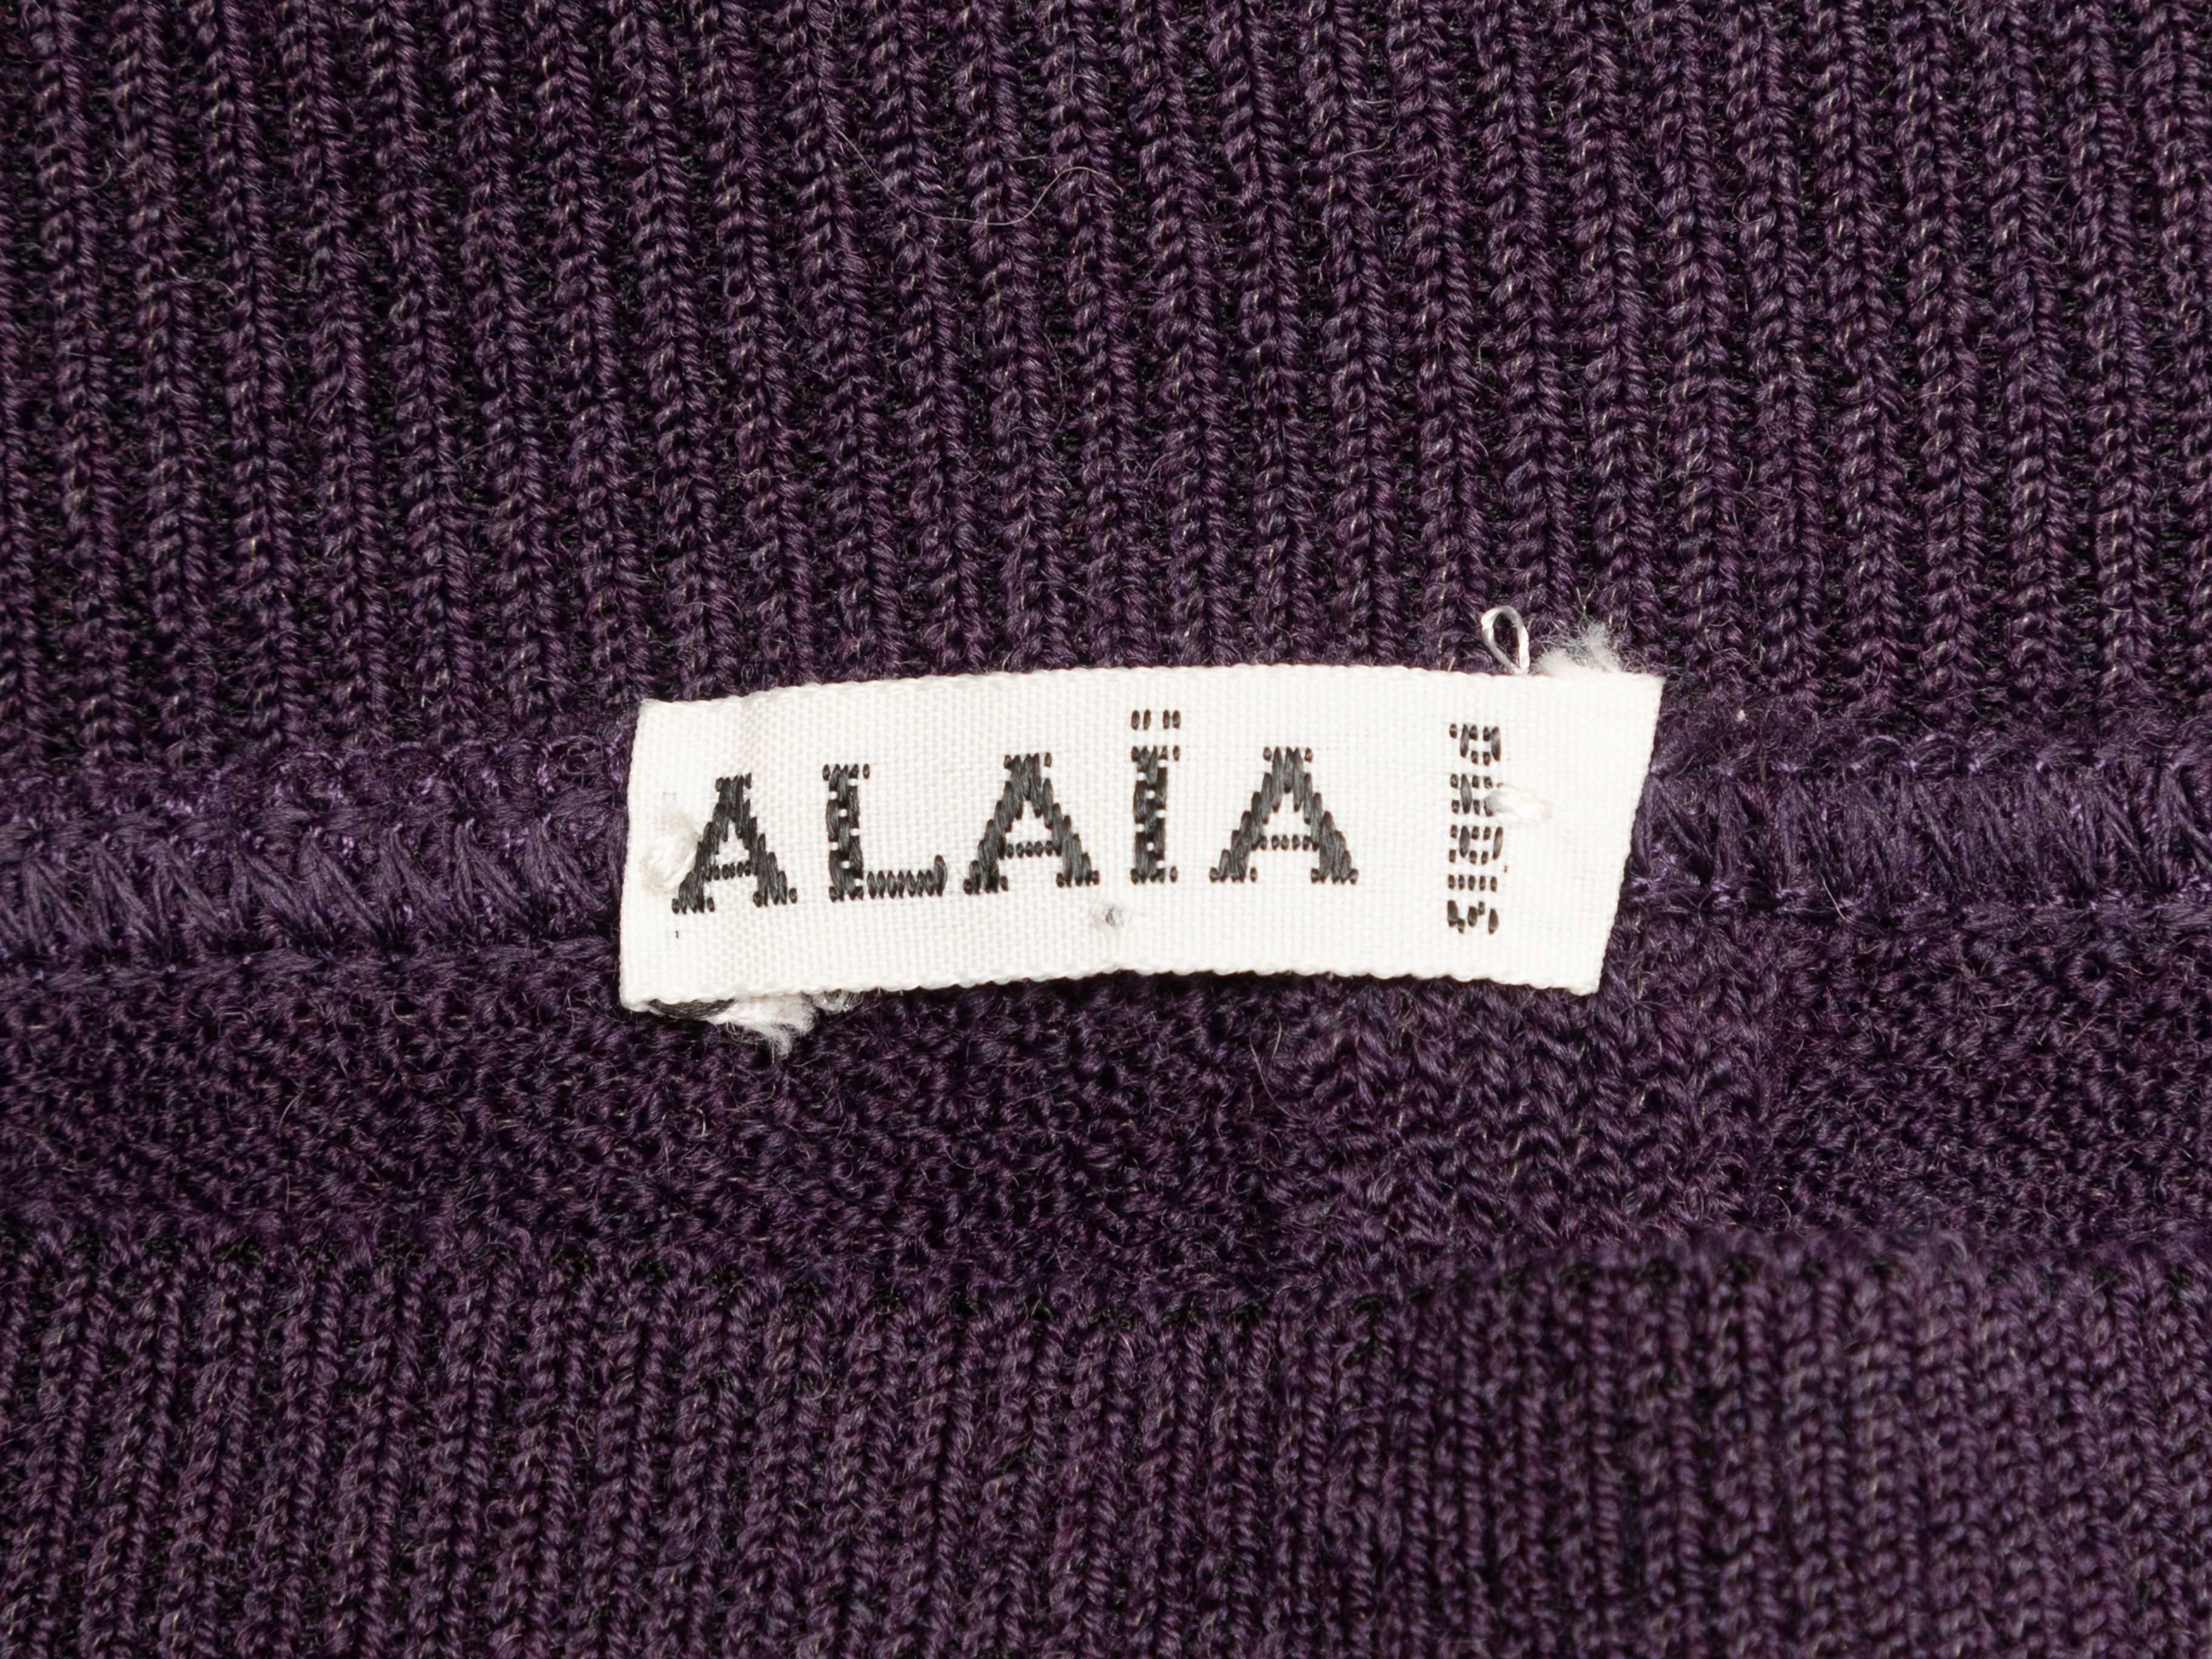 Vintage Dark Purple Alaia Wool Knit Skirt Size M - Designer Revival